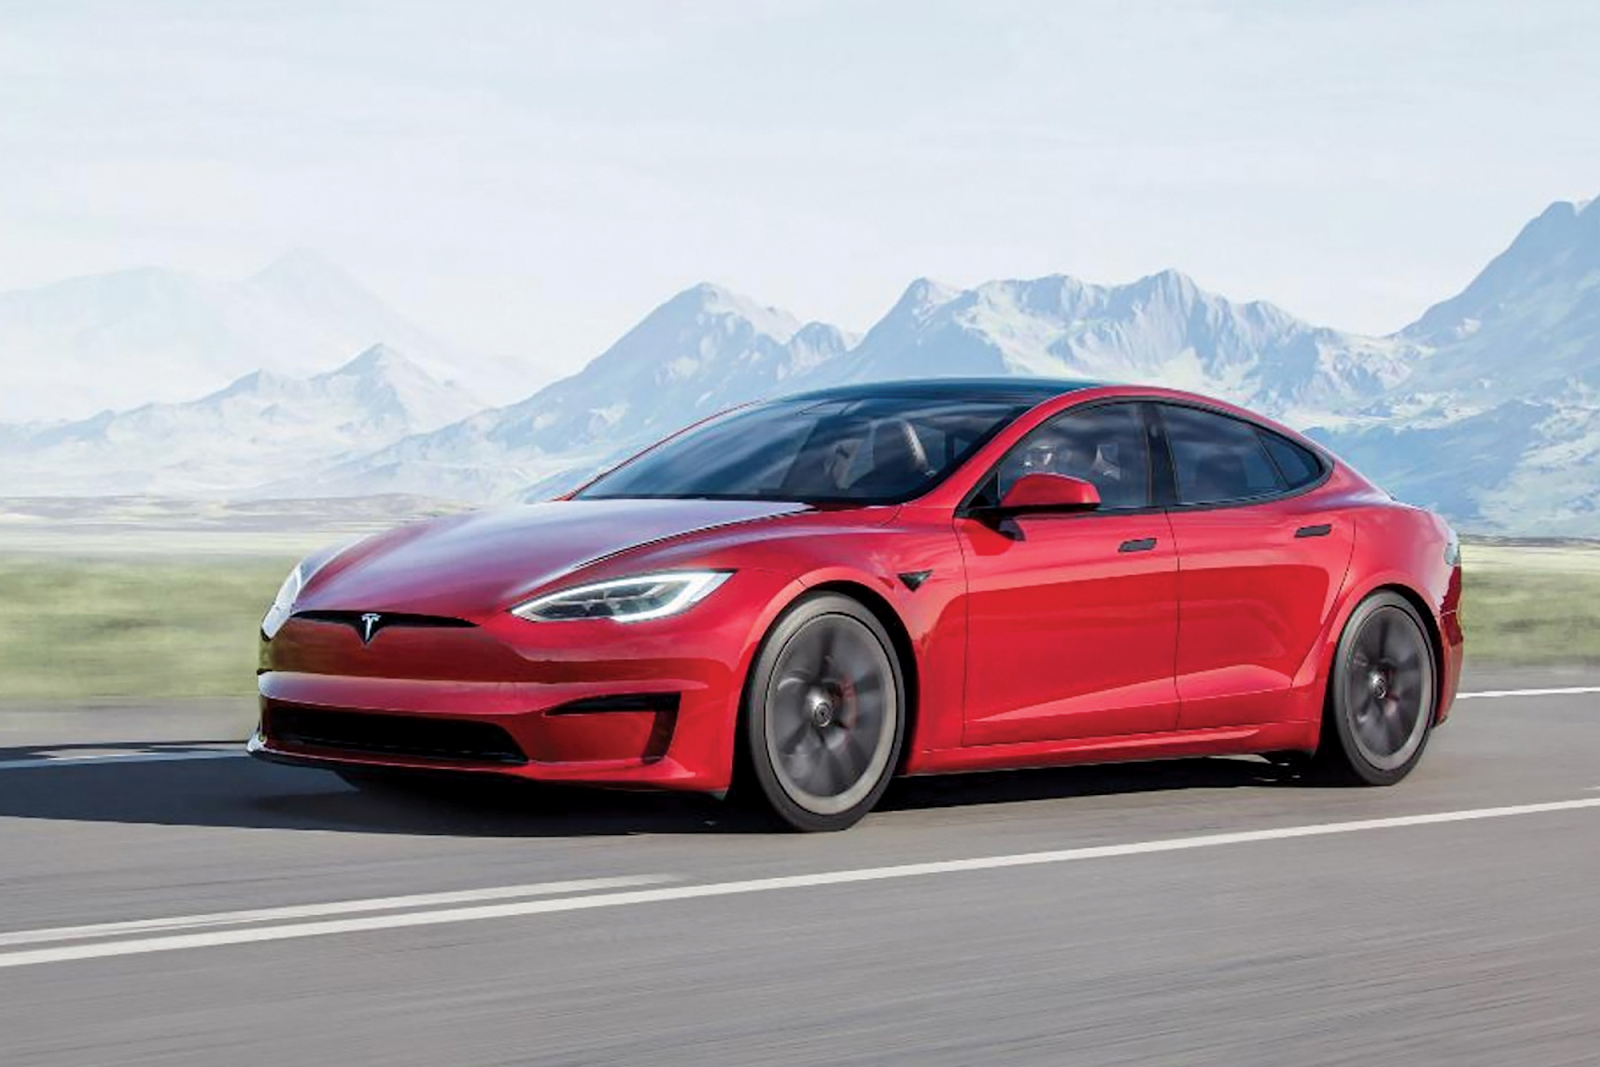 Tesla Model 3 ปี 2022 รถยนต์ Compact Car พลังงานไฟฟ้าล้วน ที่เข้ามาเปลี่ยนหน้าประวัติศาสตร์ให้วงการรถยนต์ 